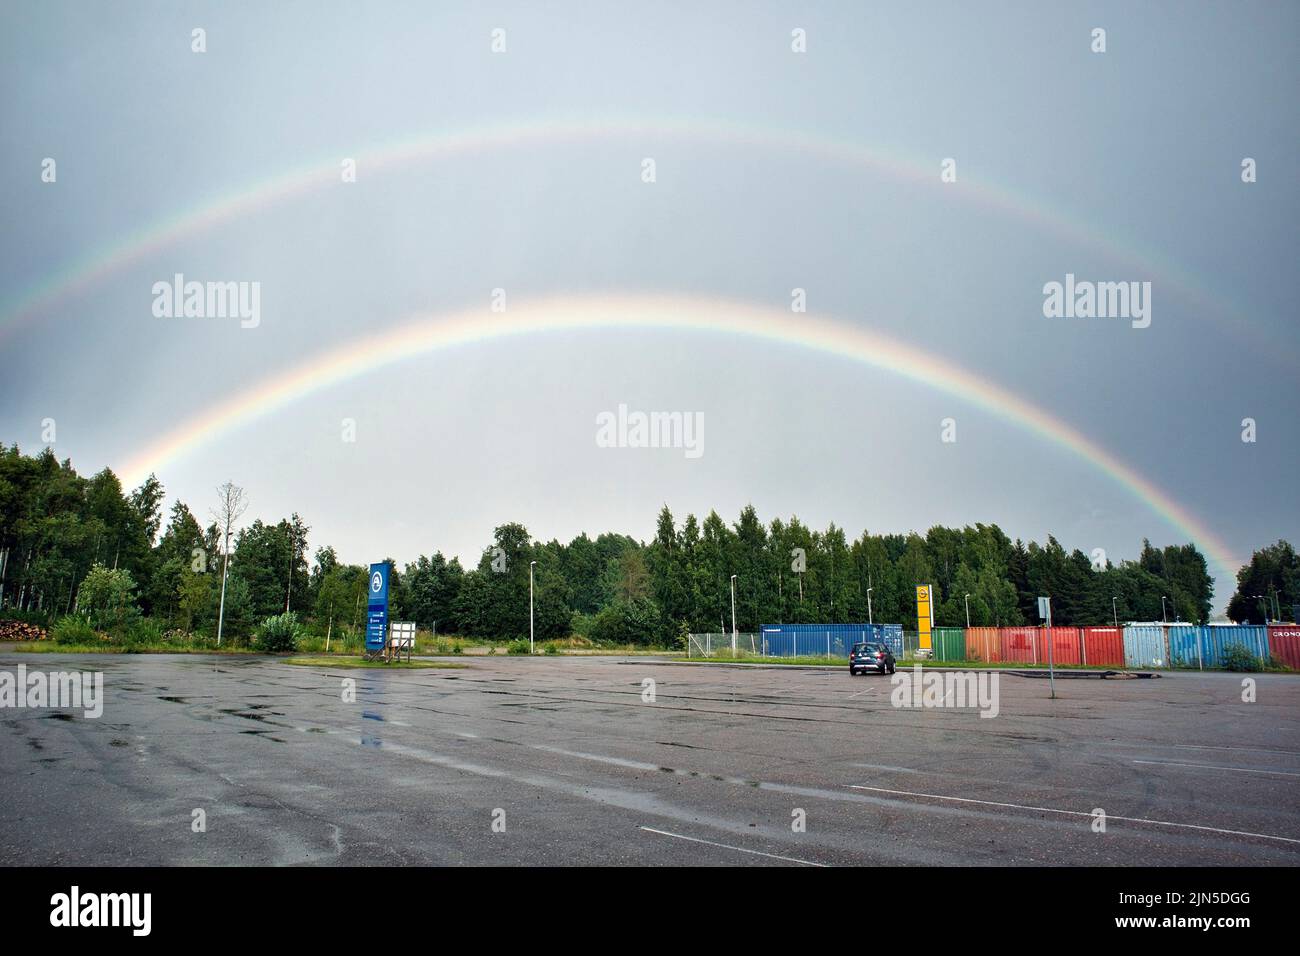 double rainbow in a cloudy sky after heavy rain Stock Photo